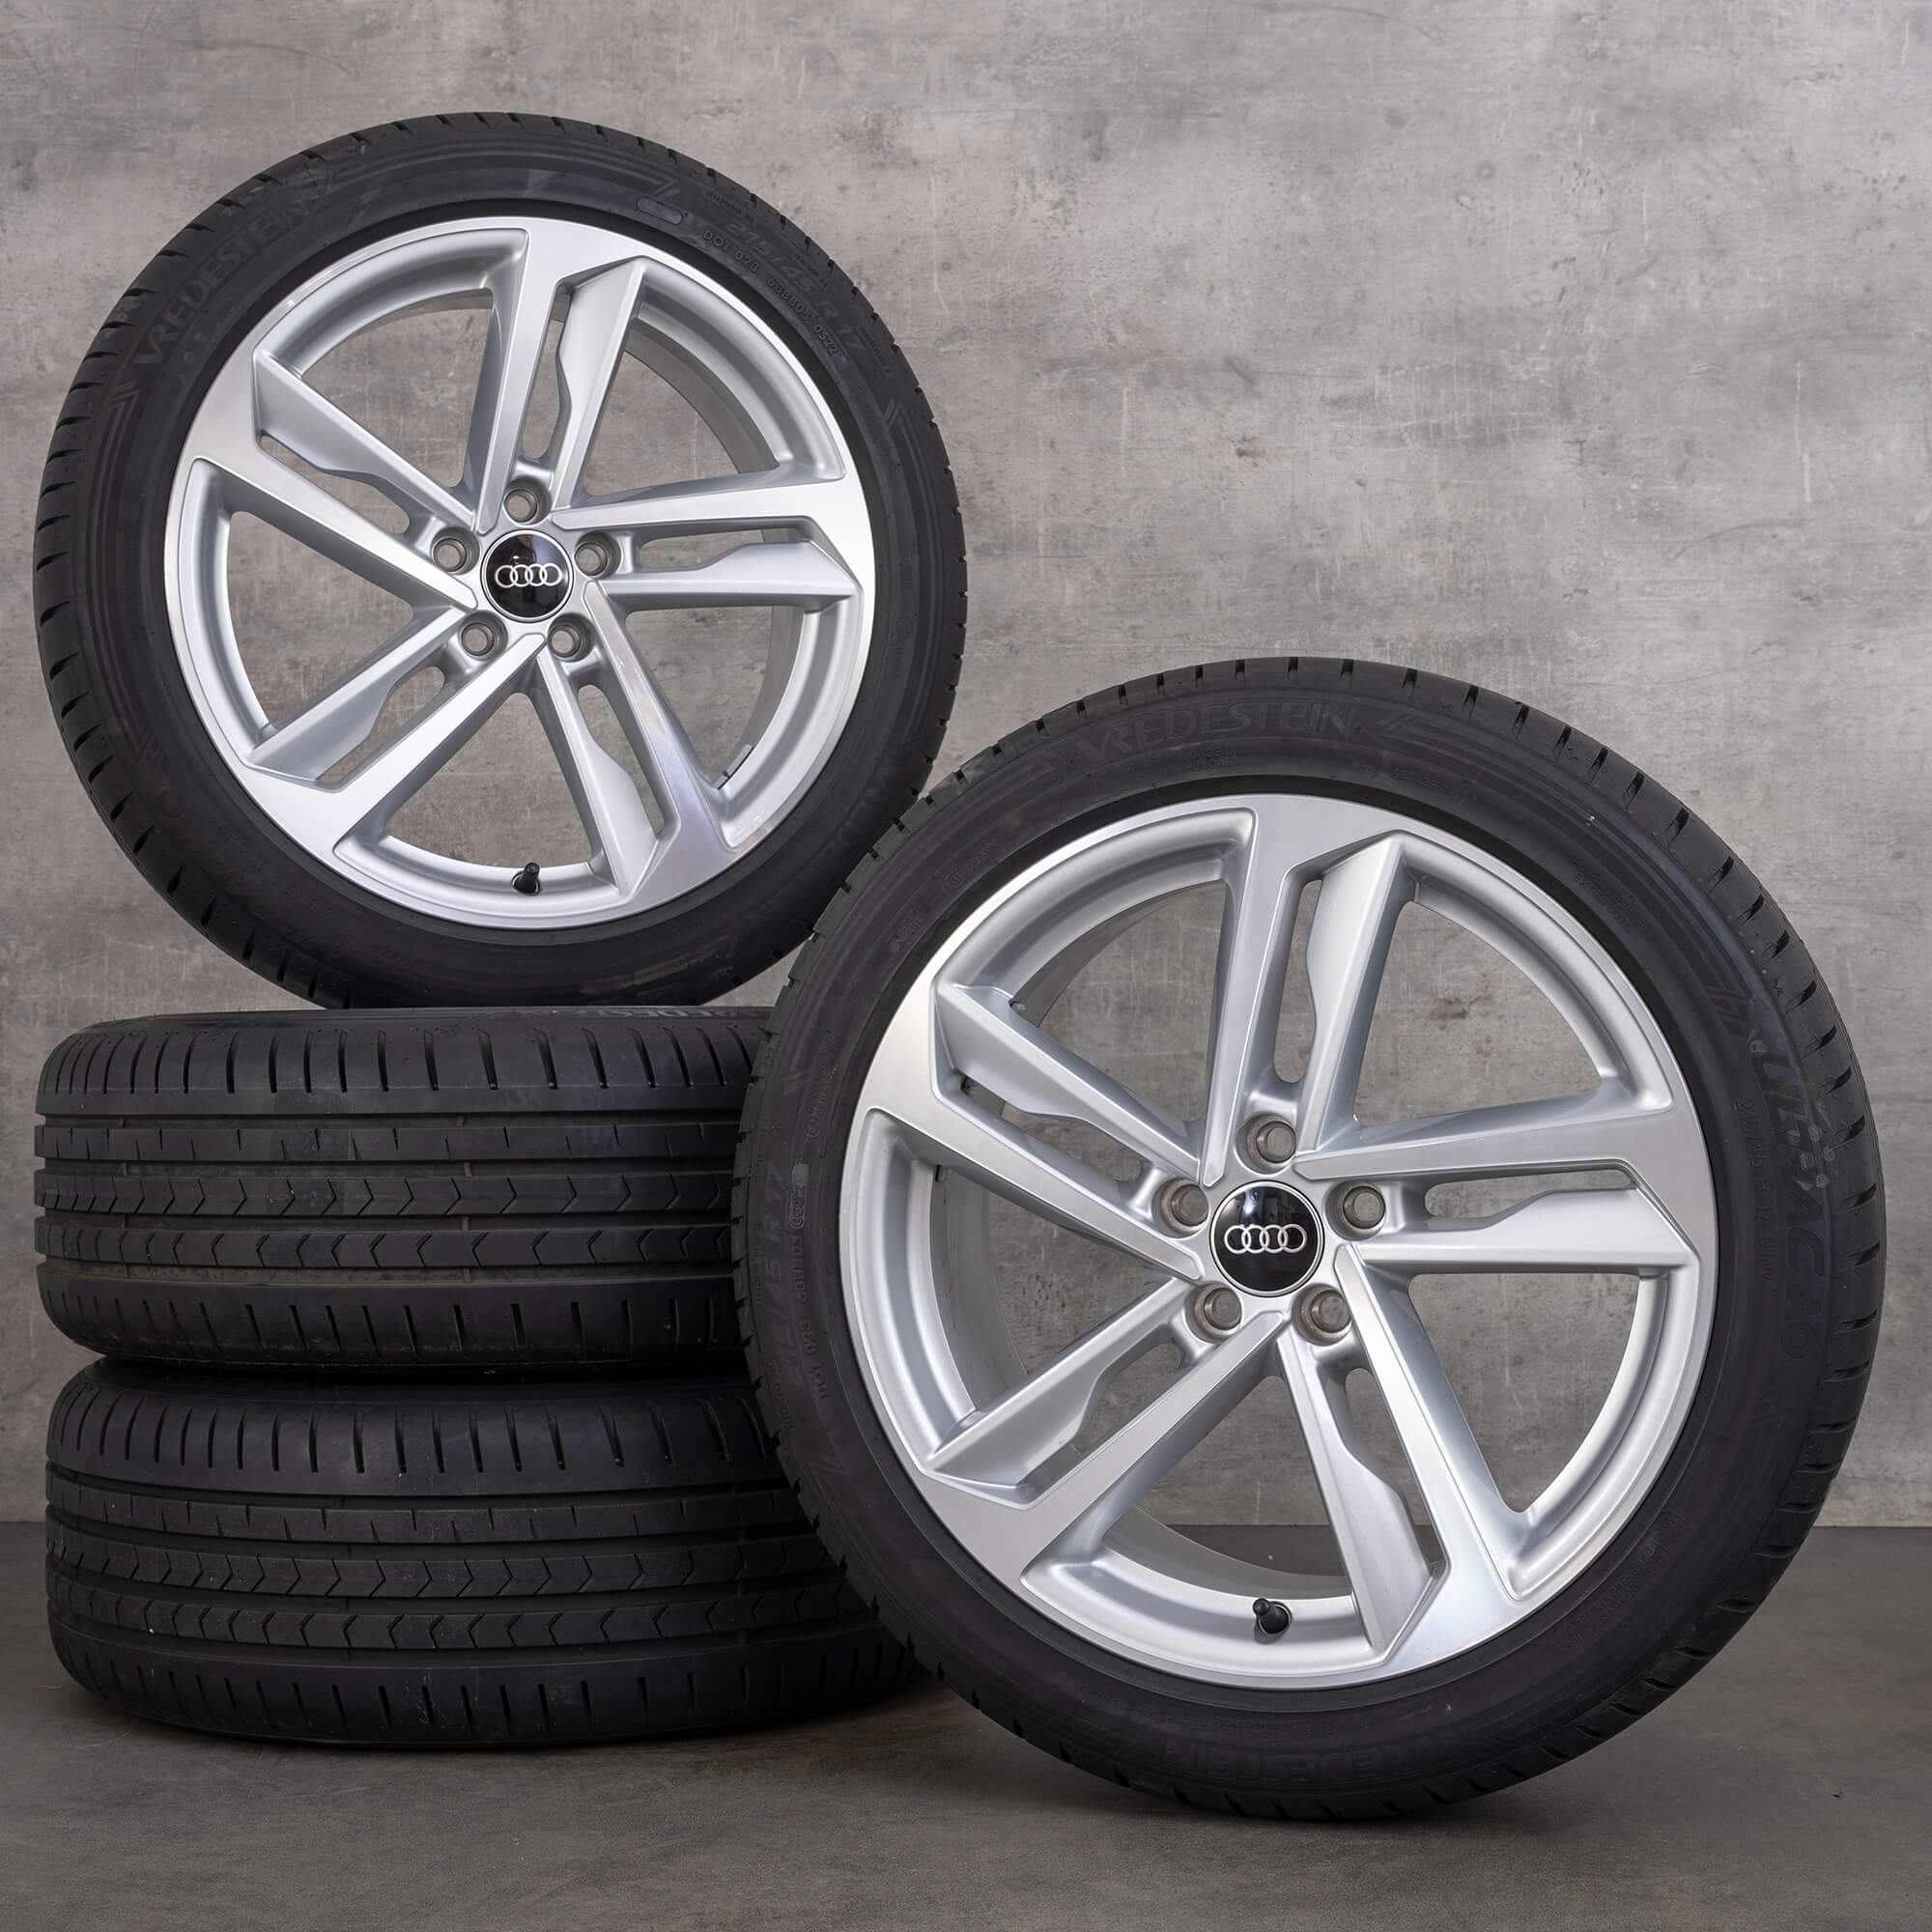 Audi A1 GB rims 17 inch summer tires wheels 82A601025K 7 mm